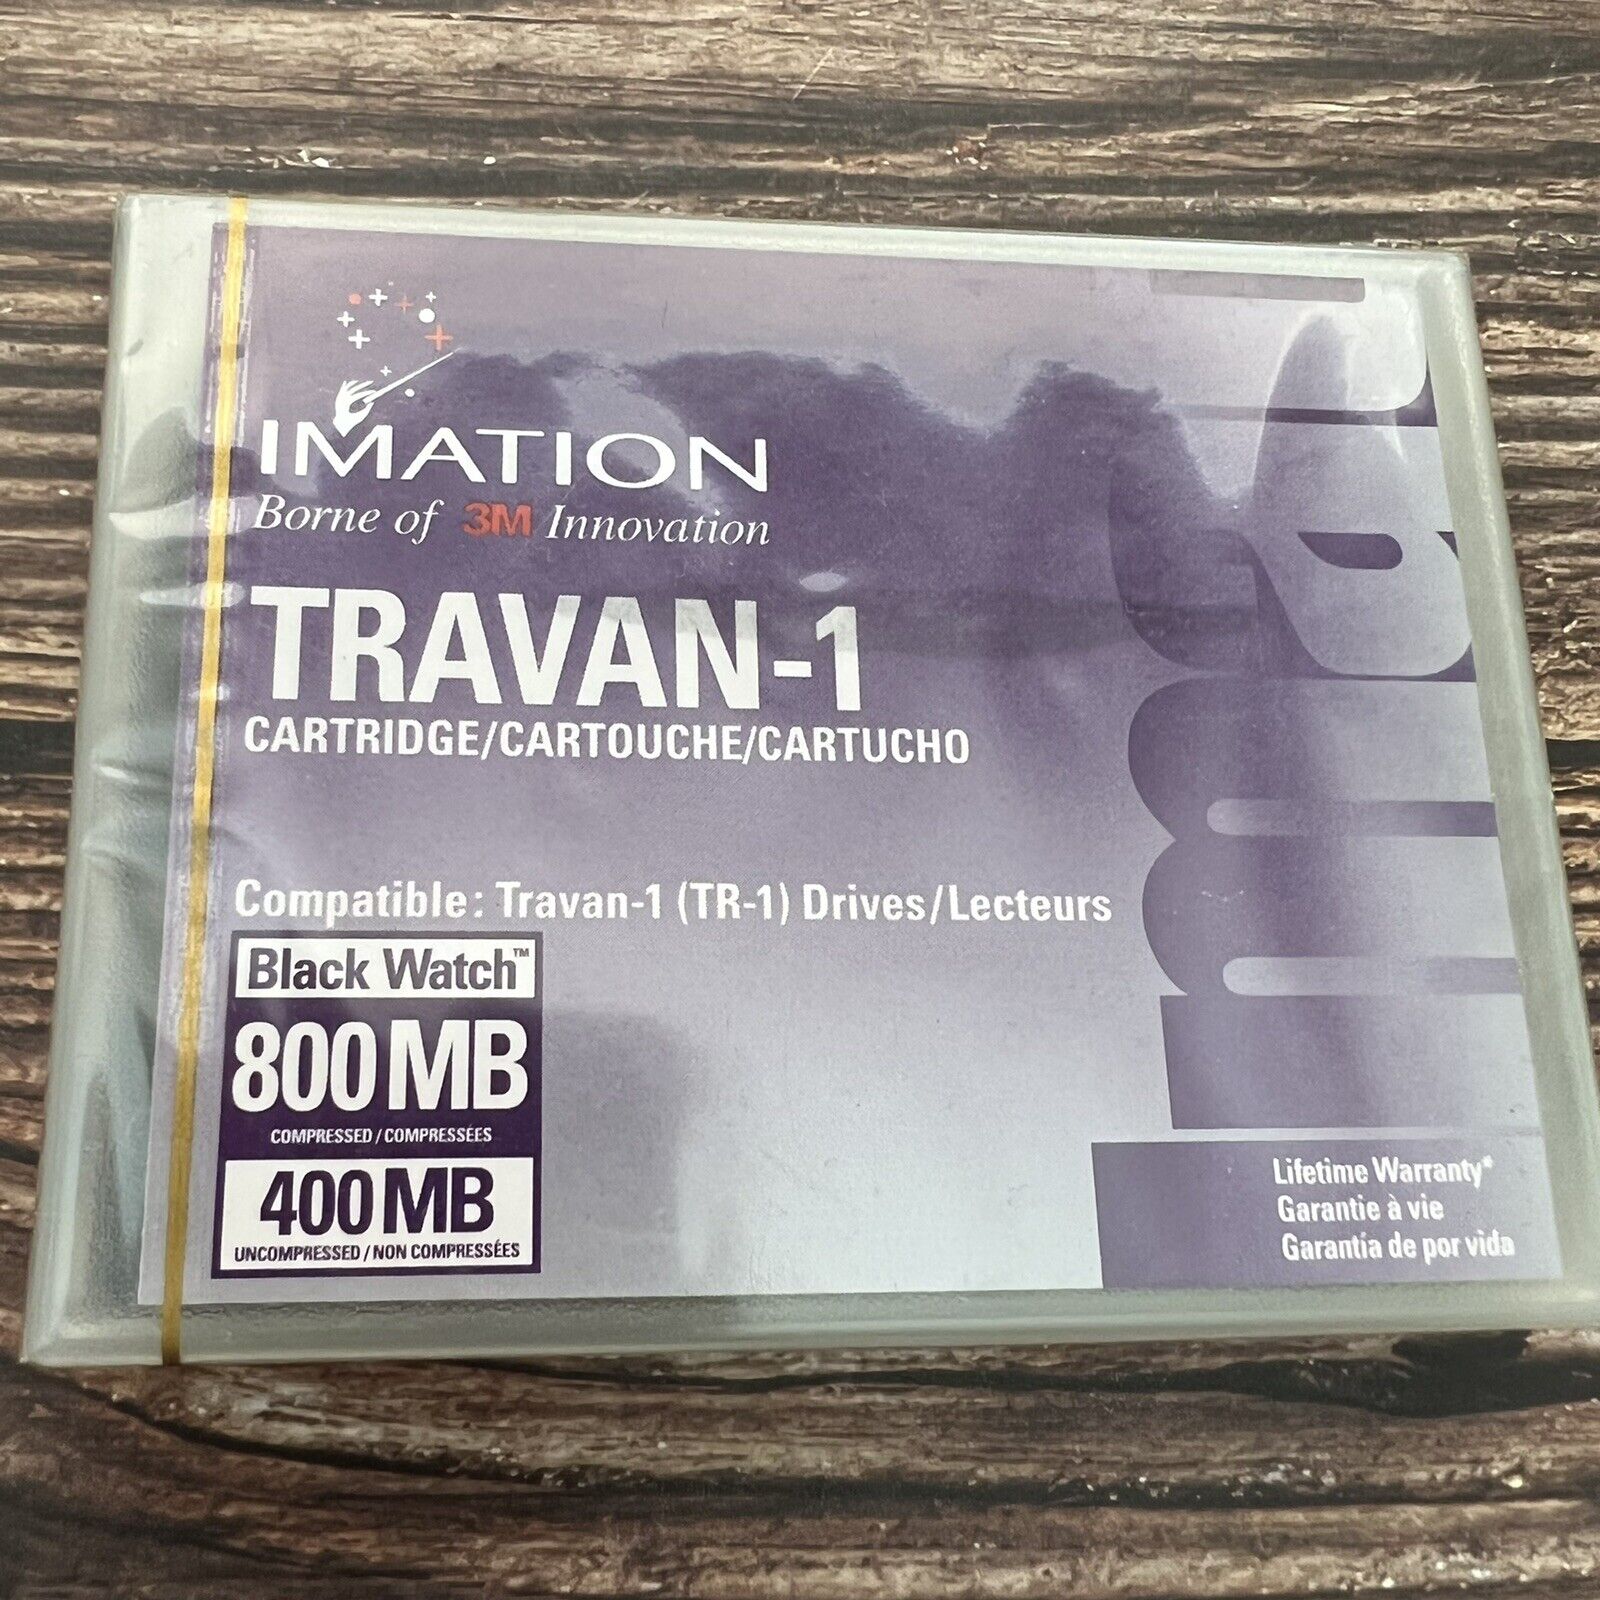 New IMATION 3M Innovation Travan 1 (TR-1) Drives 400MB/800MB Cartridge - QTY: 5